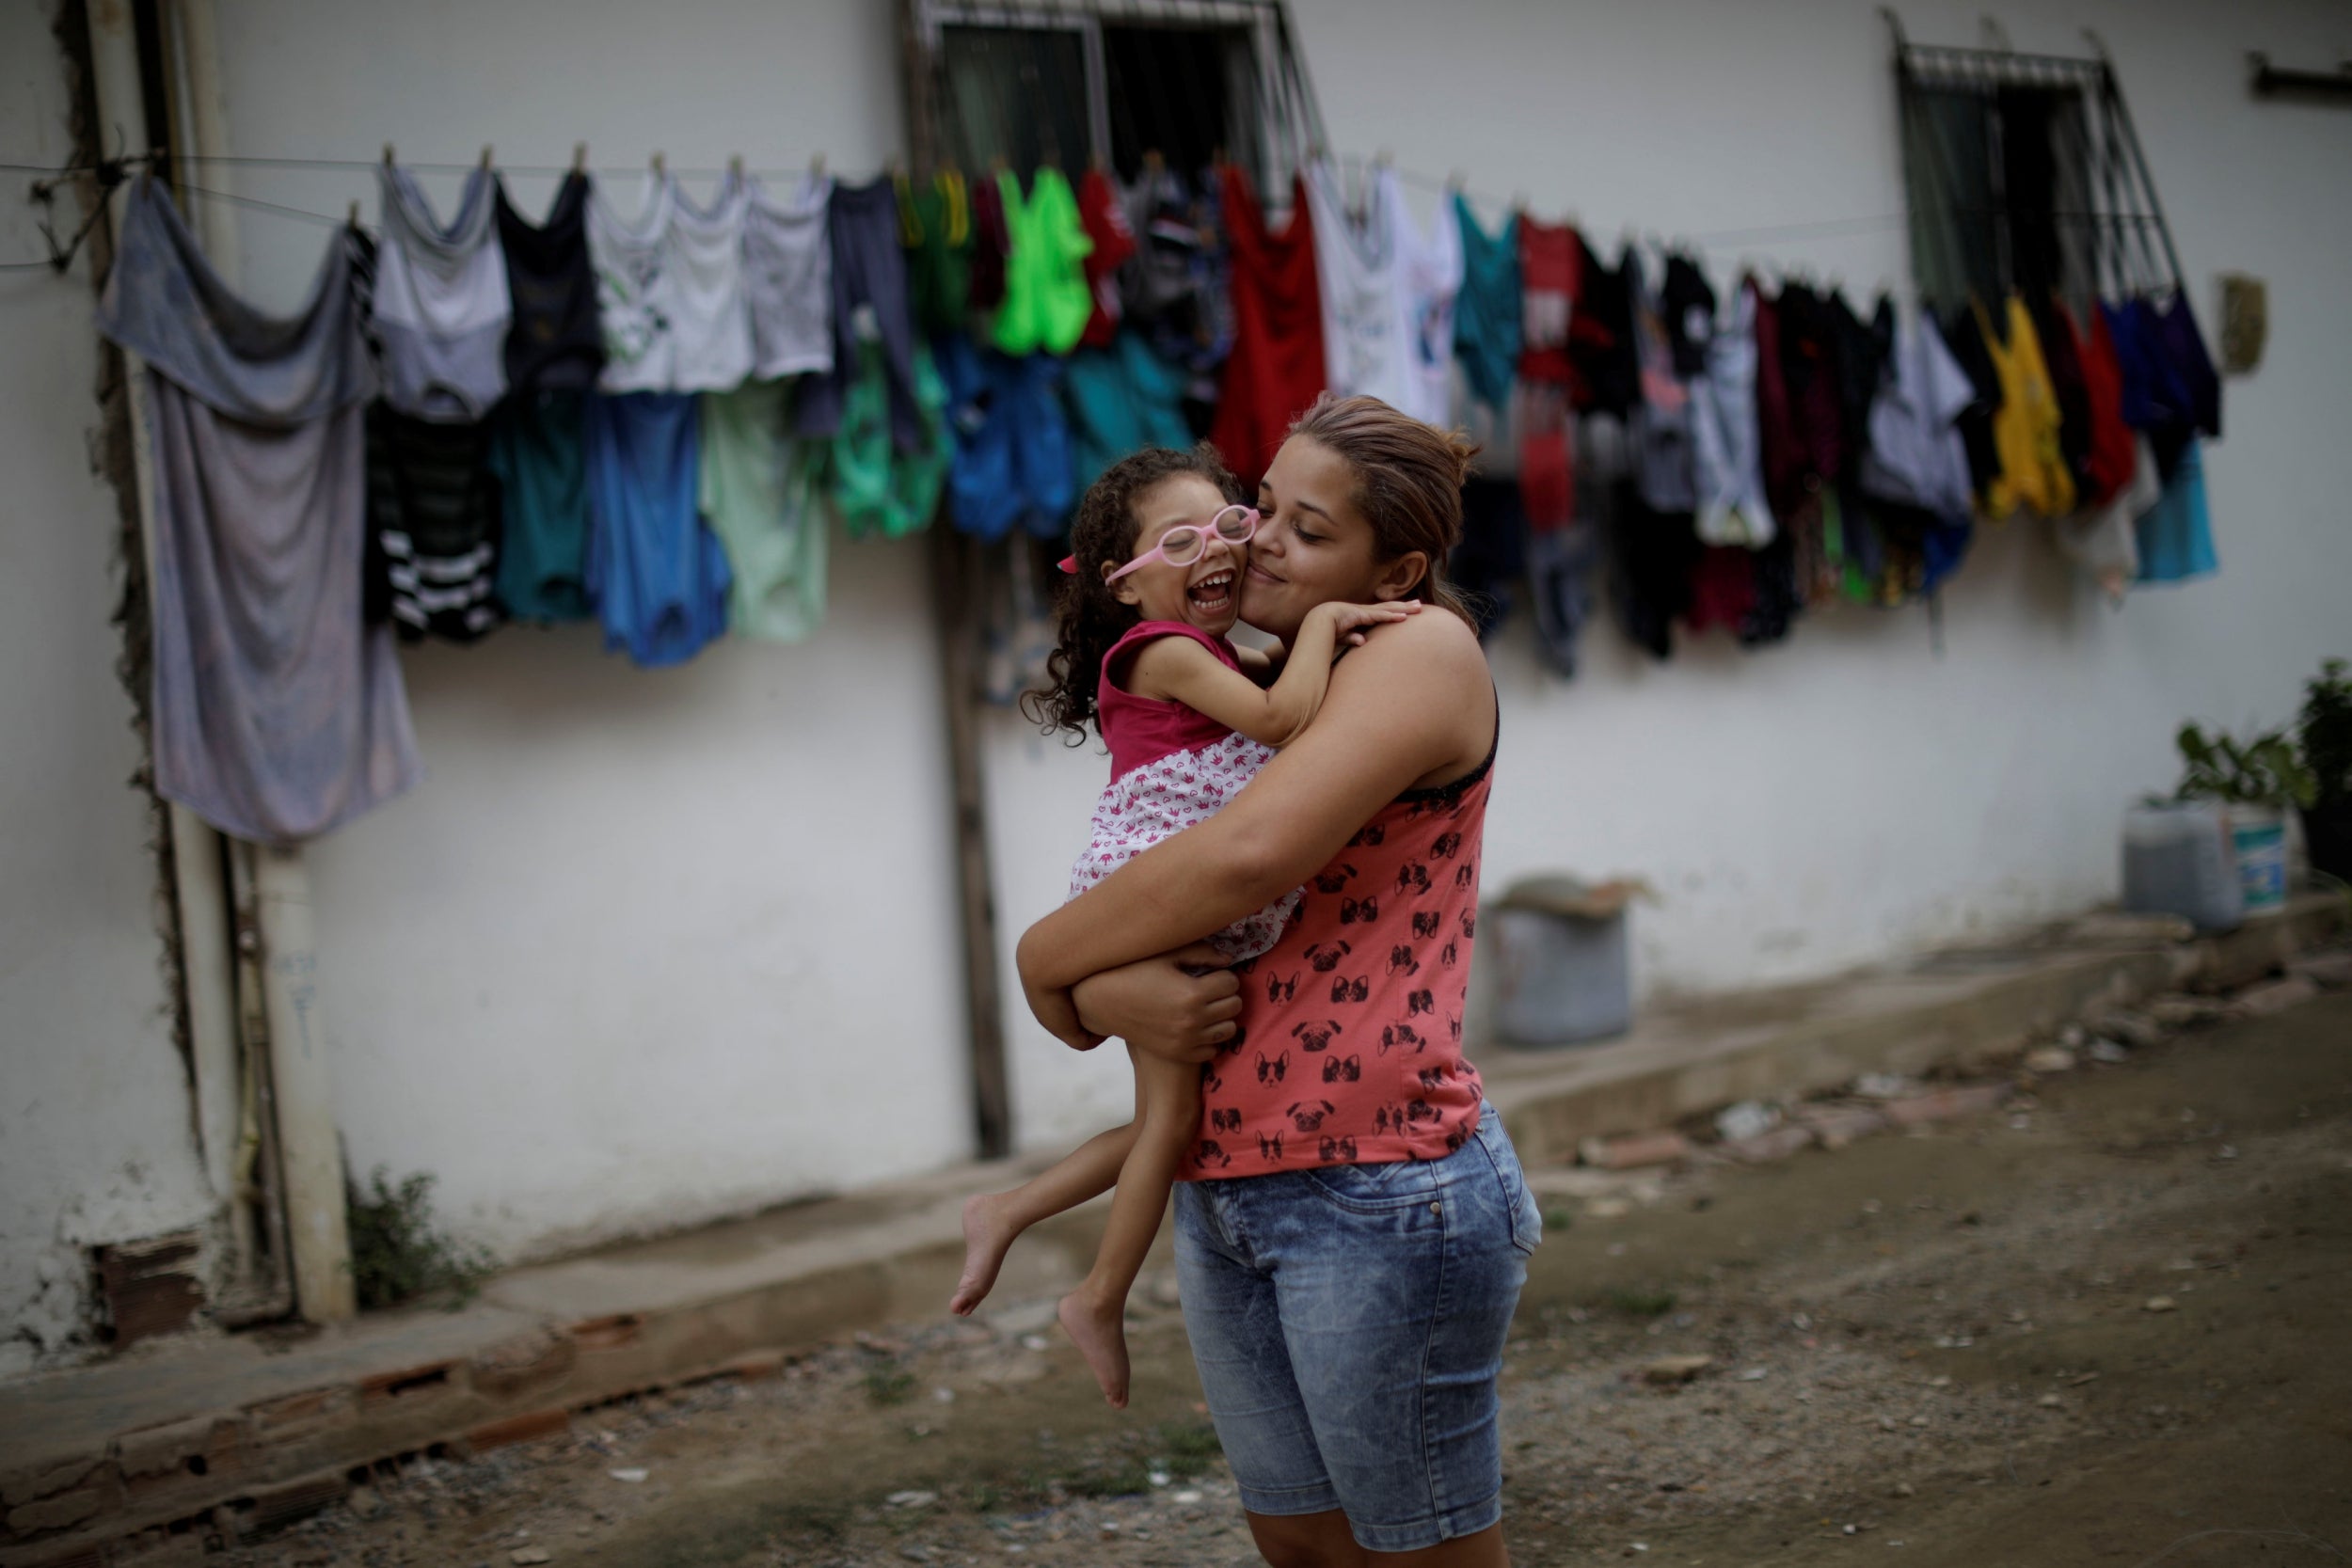 Gabriela holdsing her daughter Ana Sophia outside their house